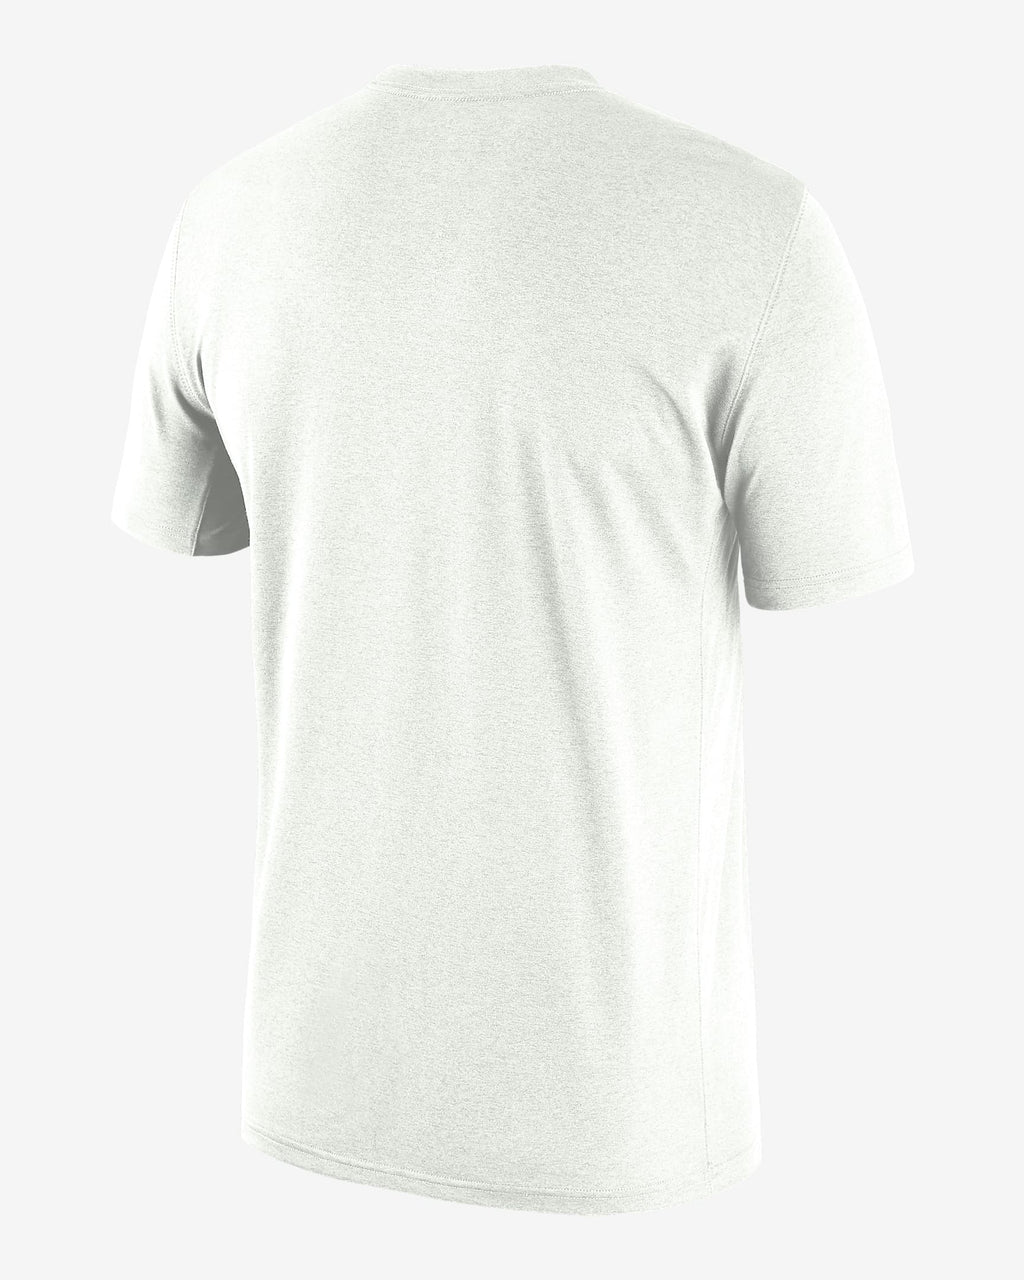 Los Angeles Lakers Essential Men's Nike NBA Max90 T-Shirt 'White'